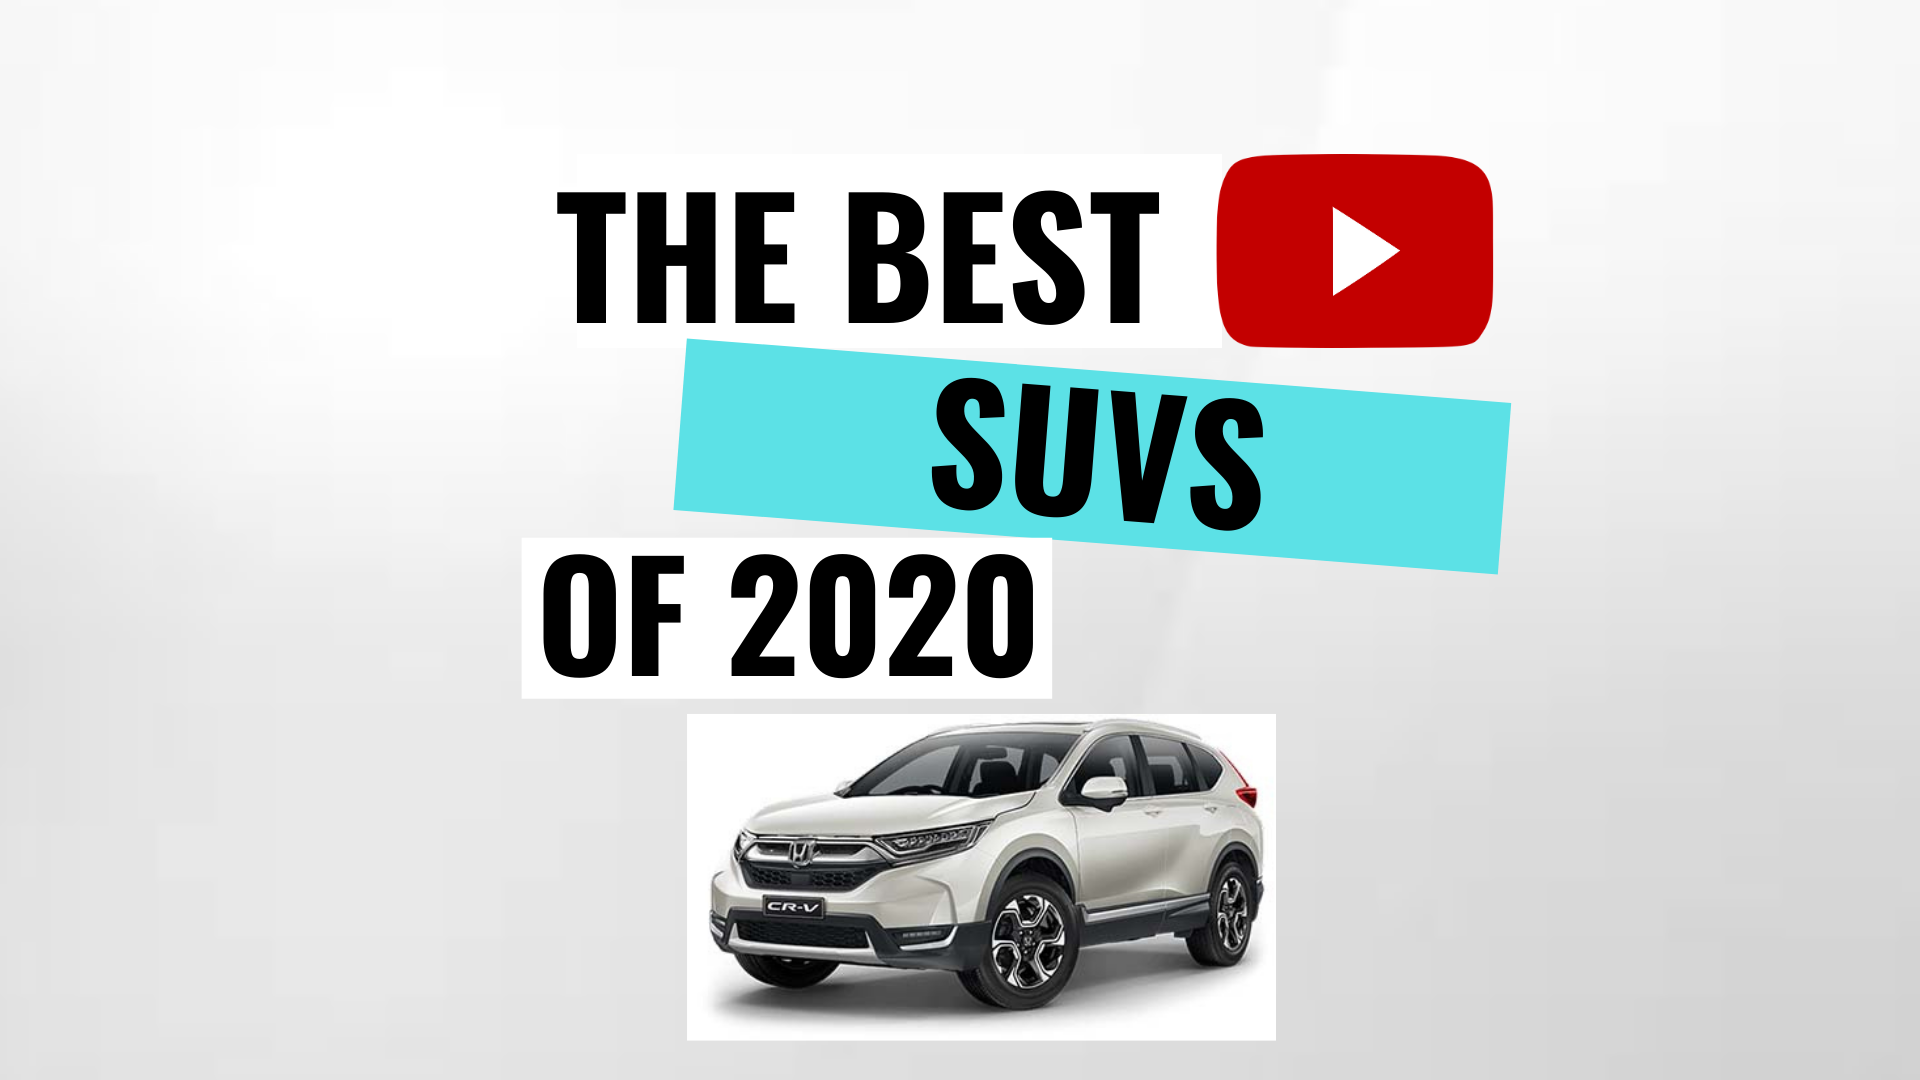 The Best SUVs of 2020